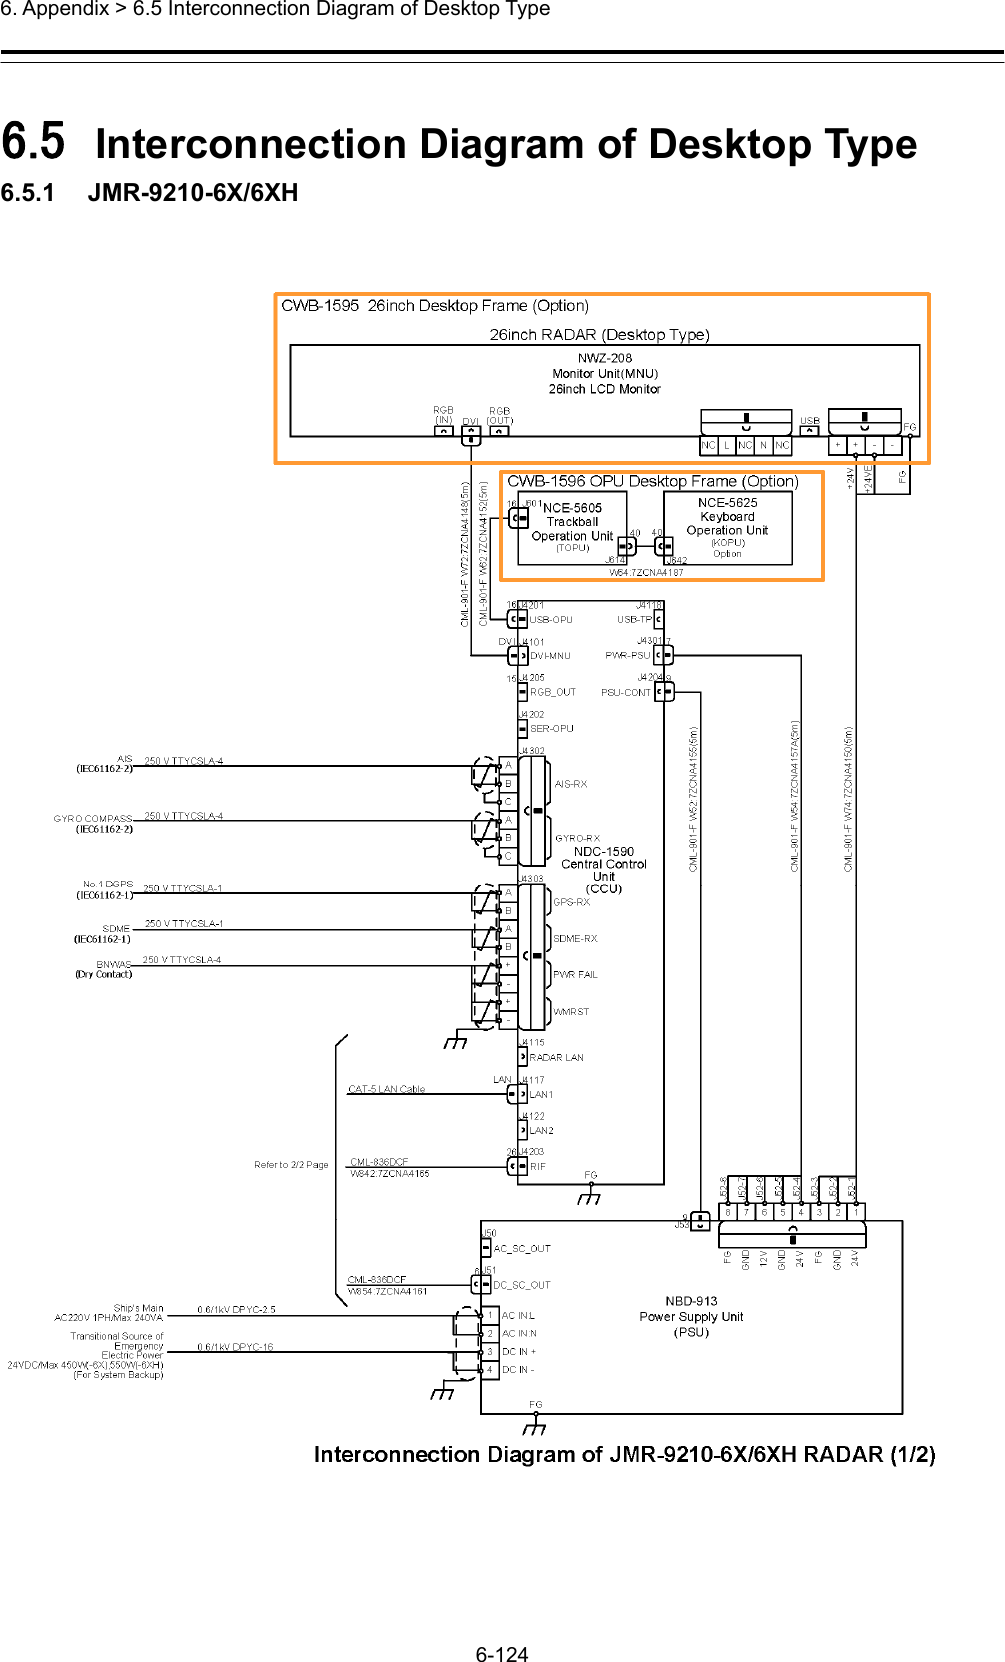  6. Appendix &gt; 6.5 Interconnection Diagram of Desktop Type 6-124  6.5  Interconnection Diagram of Desktop Type 6.5.1   JMR-9210-6X/6XH  